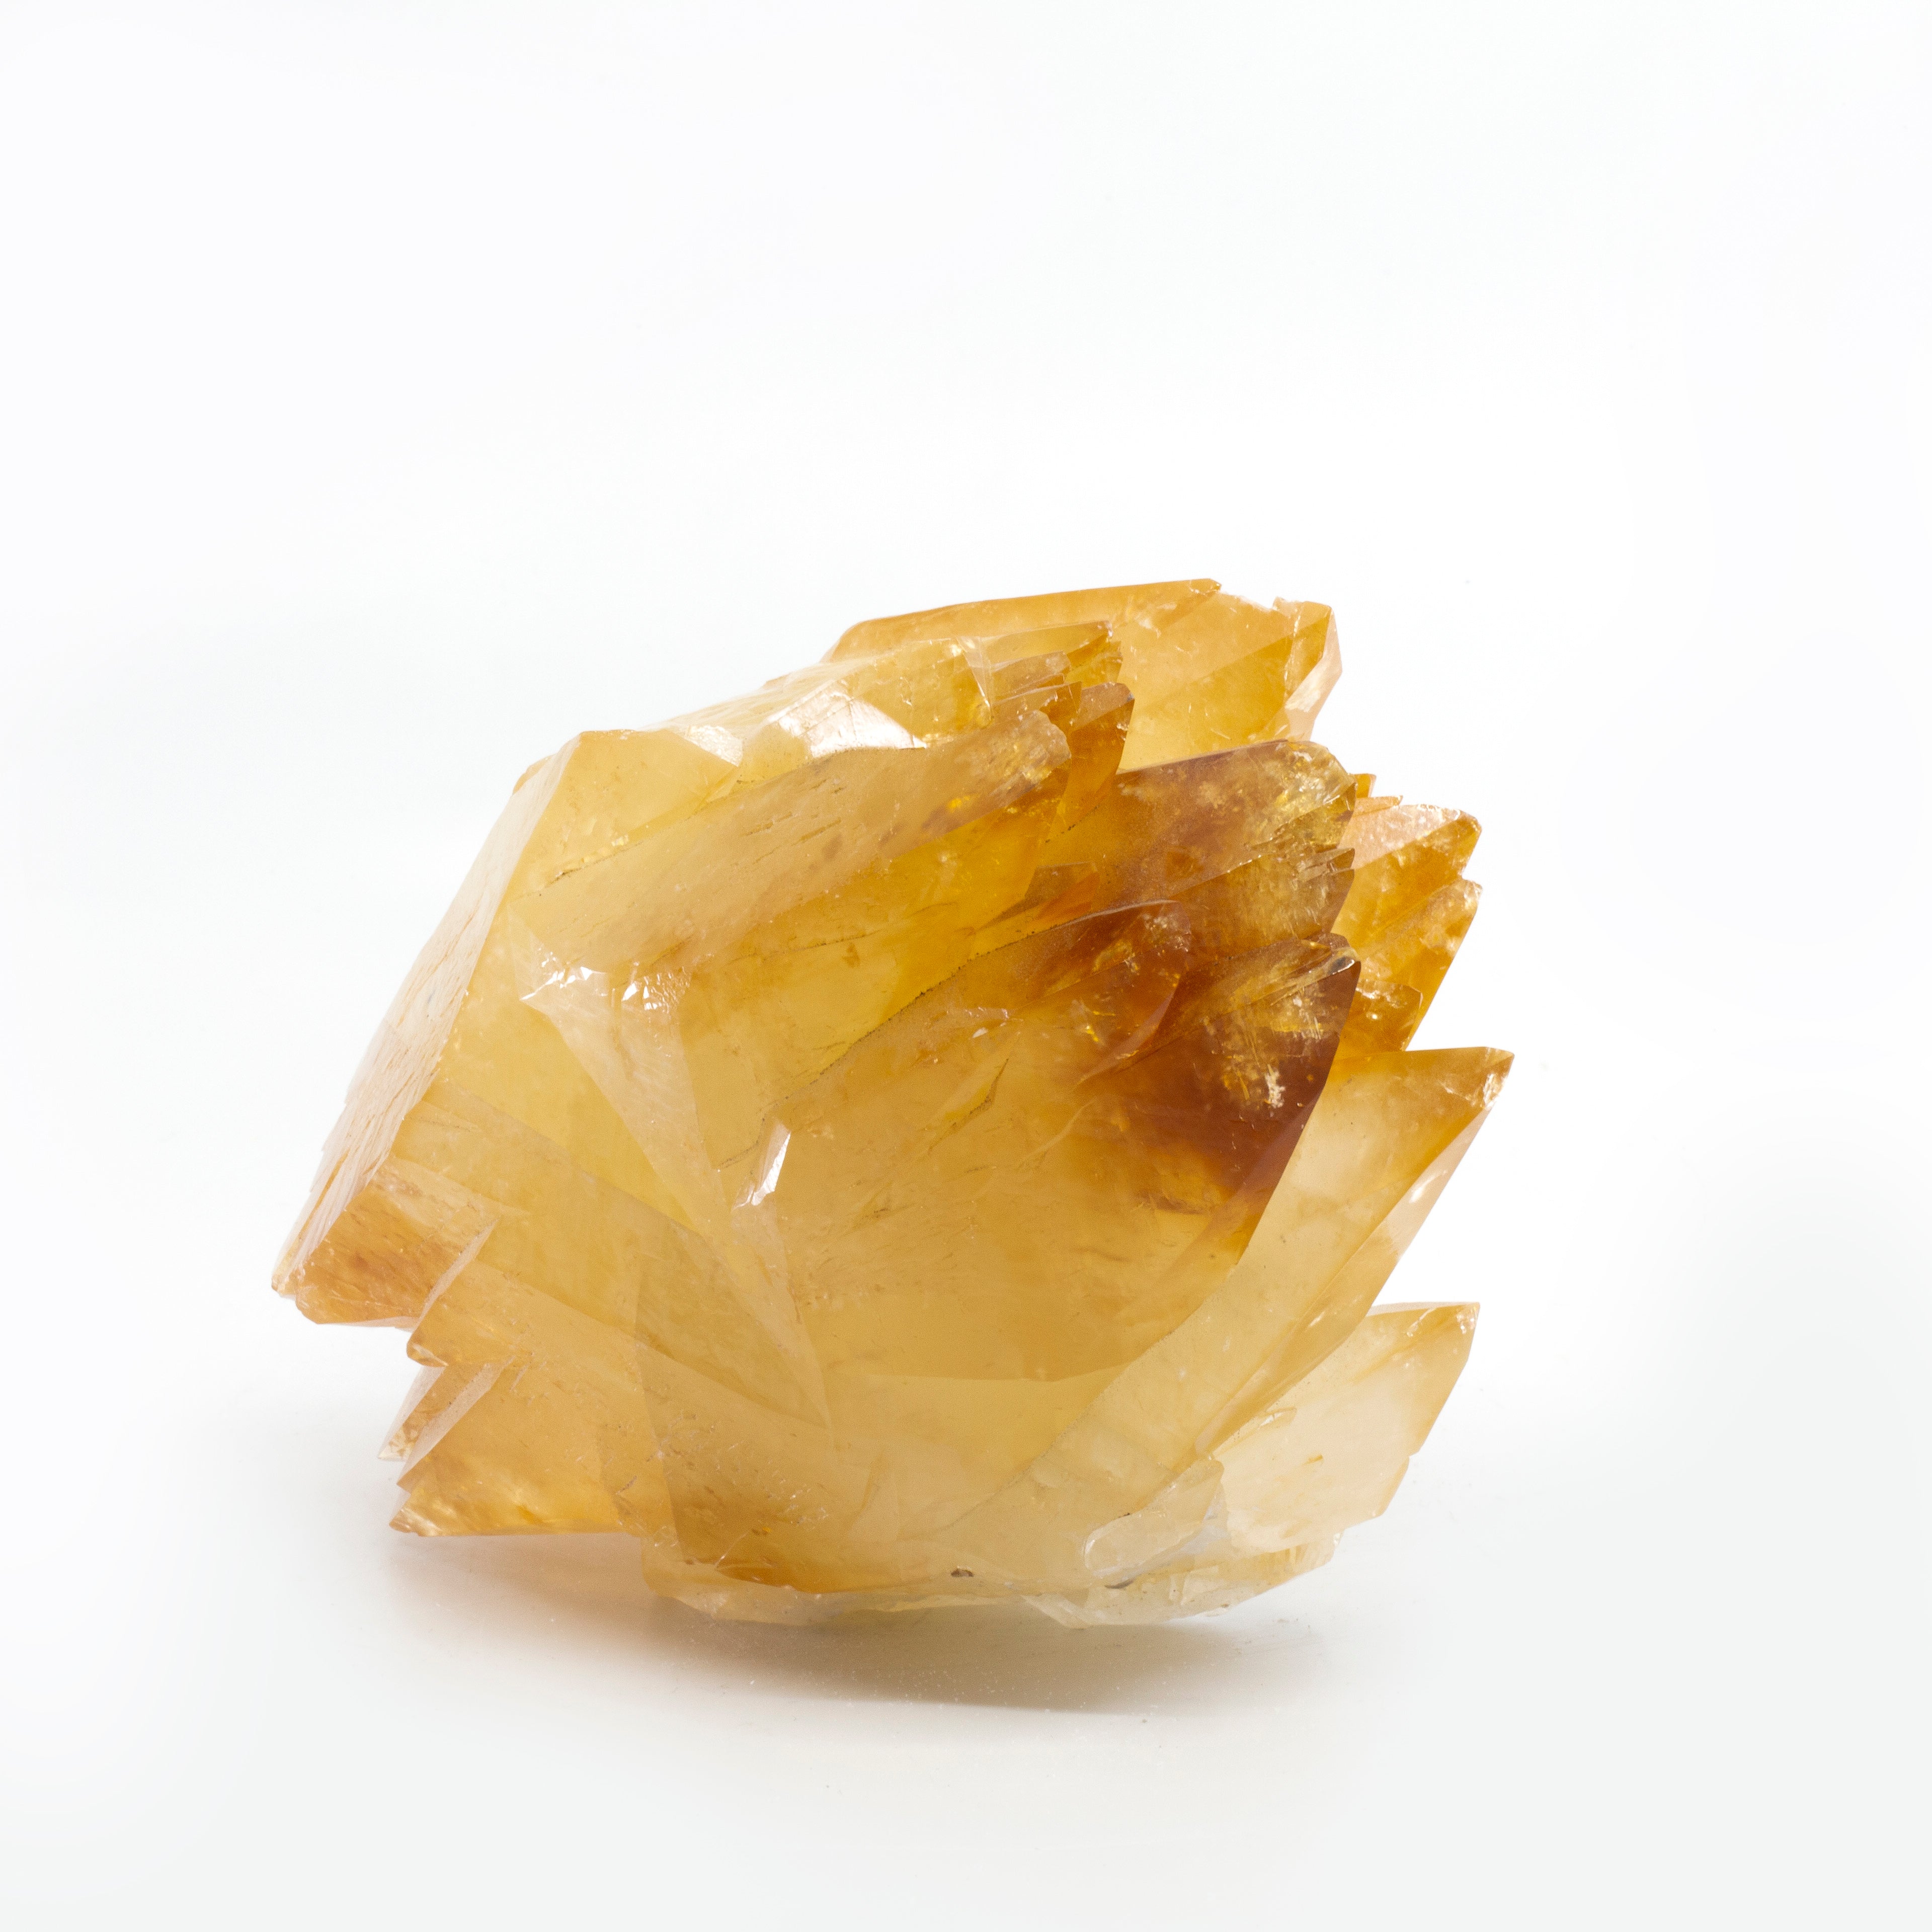 Calcite 5 inch 3.5 lb Natural Crystal Specimen - Elmwood, Tennessee - HHX-006 - Crystalarium